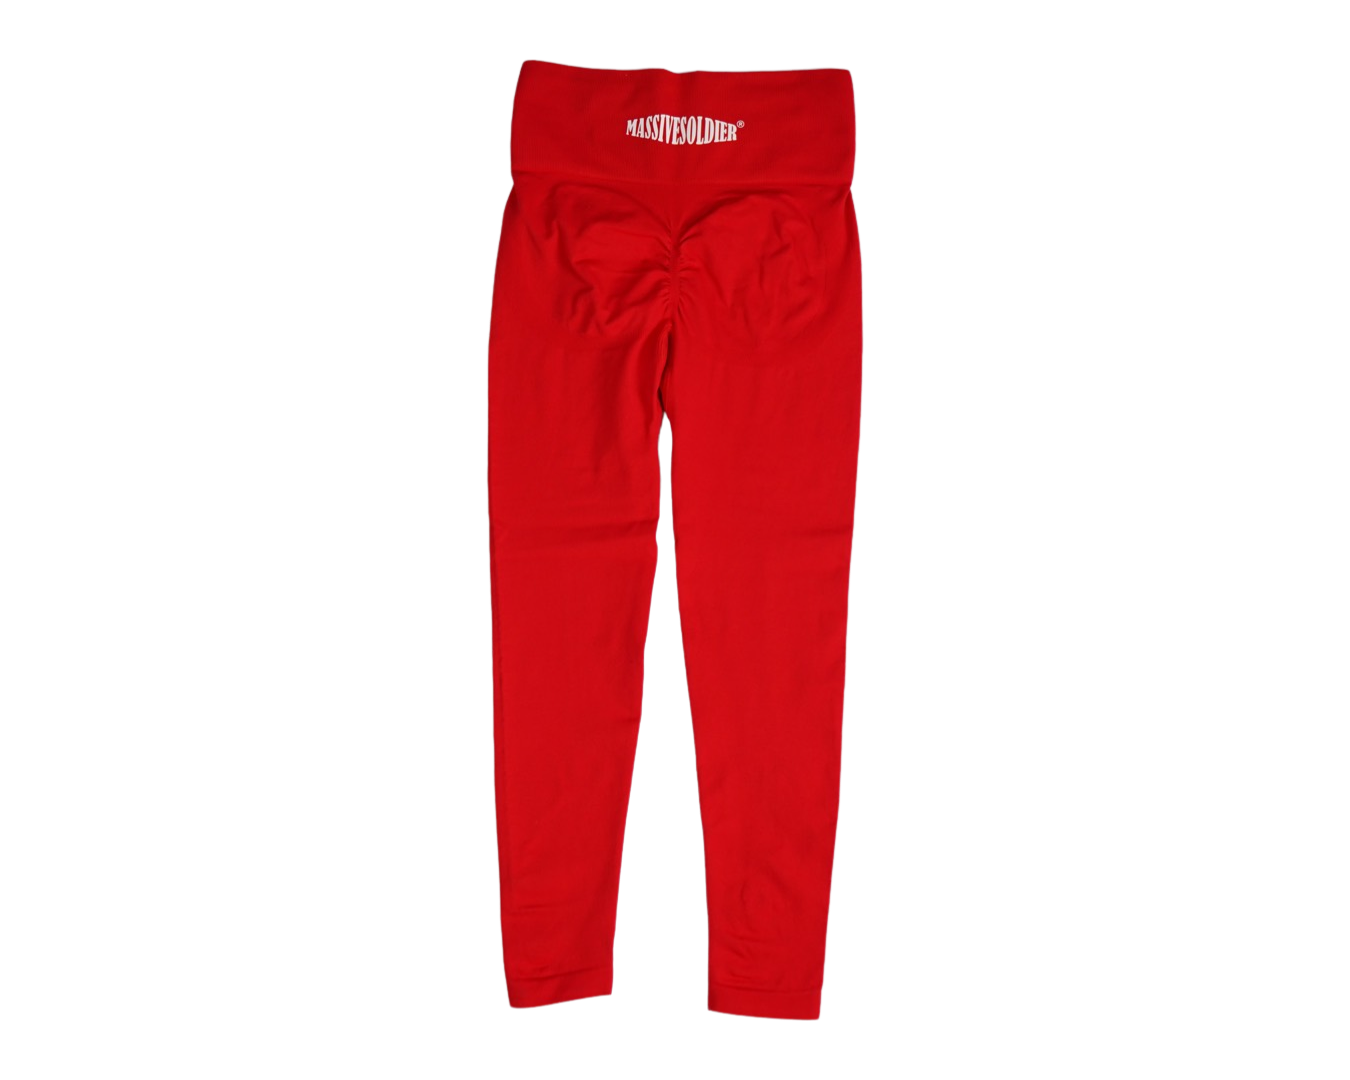 Solid red scrunch leggings 